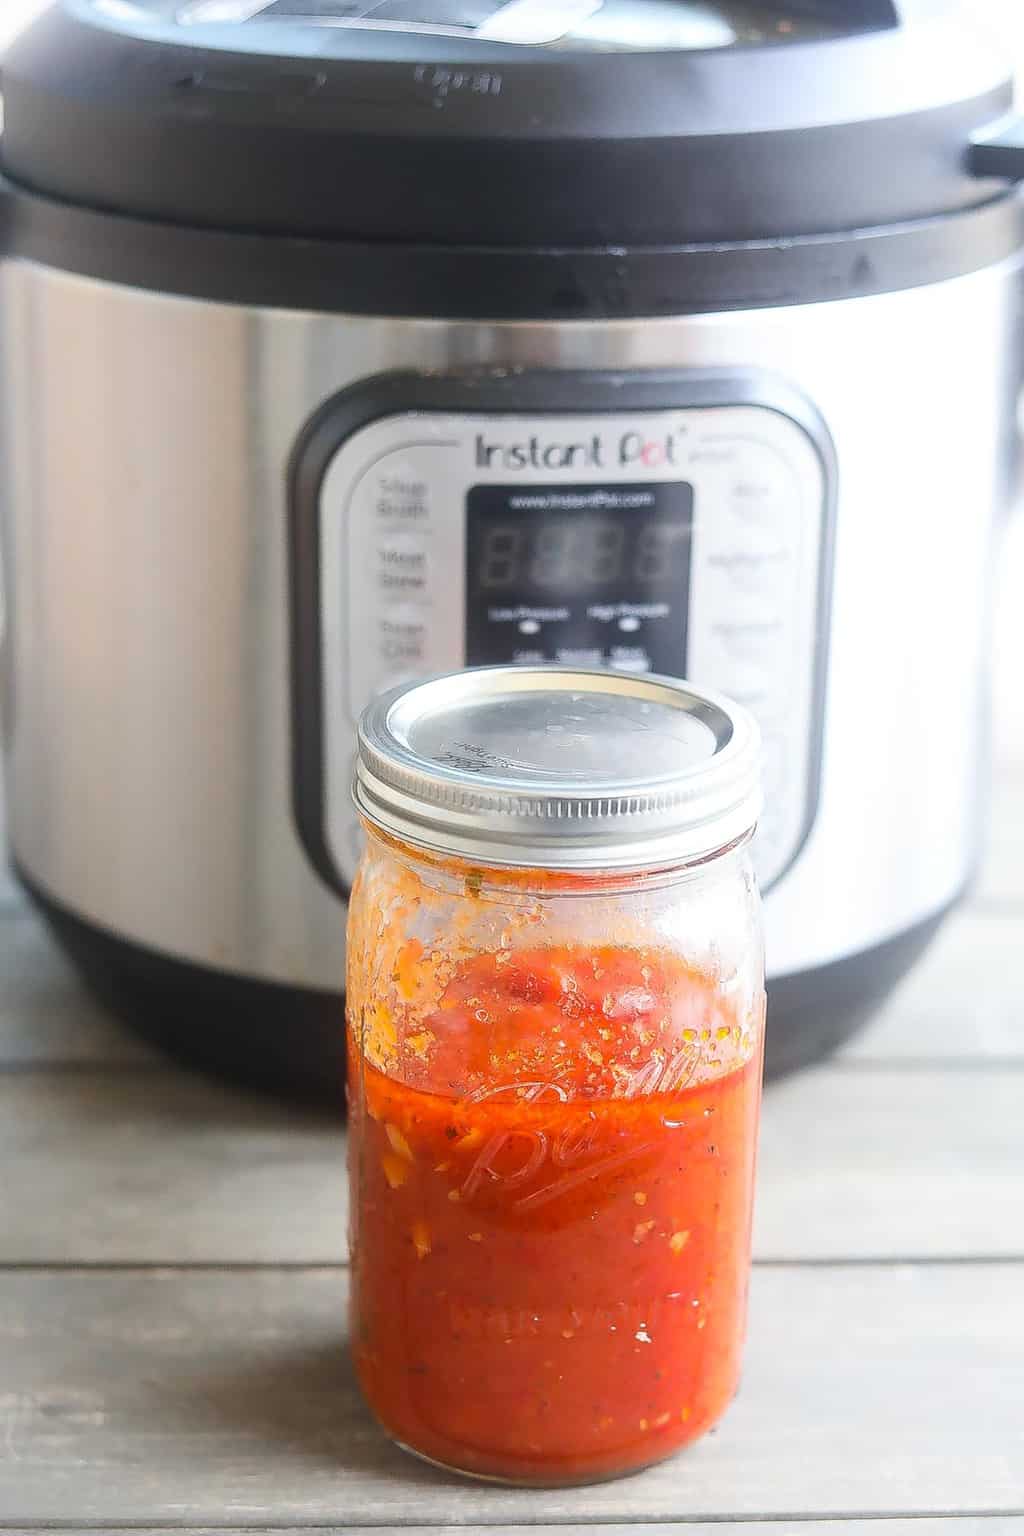 spaghetti sauce in a jar in front of instnat pot